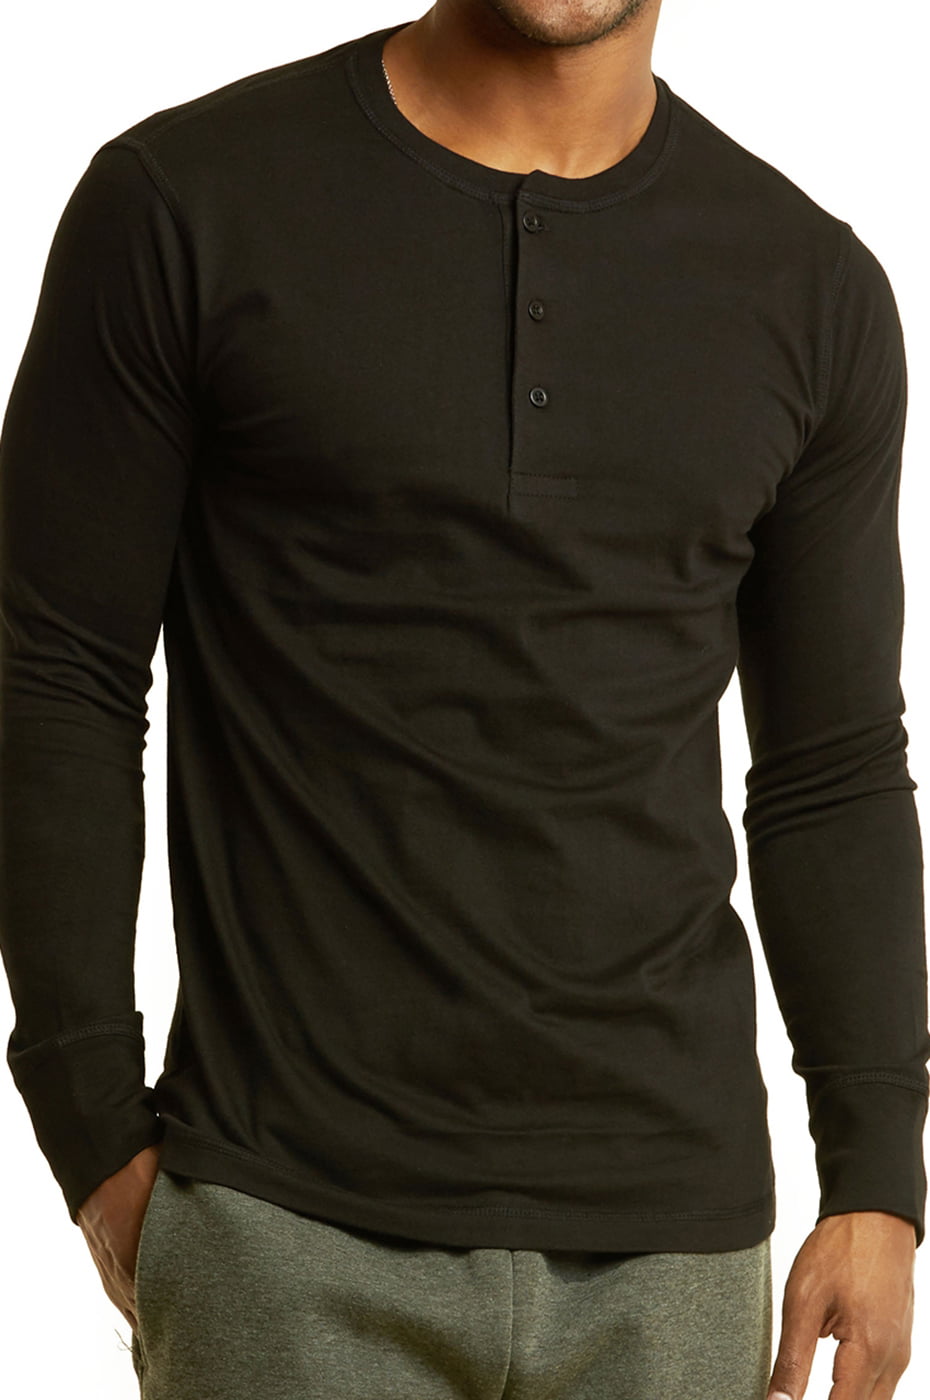 Blended - Men's Henley 3-Button Pullover Cotton T-Shirt Long Sleeve